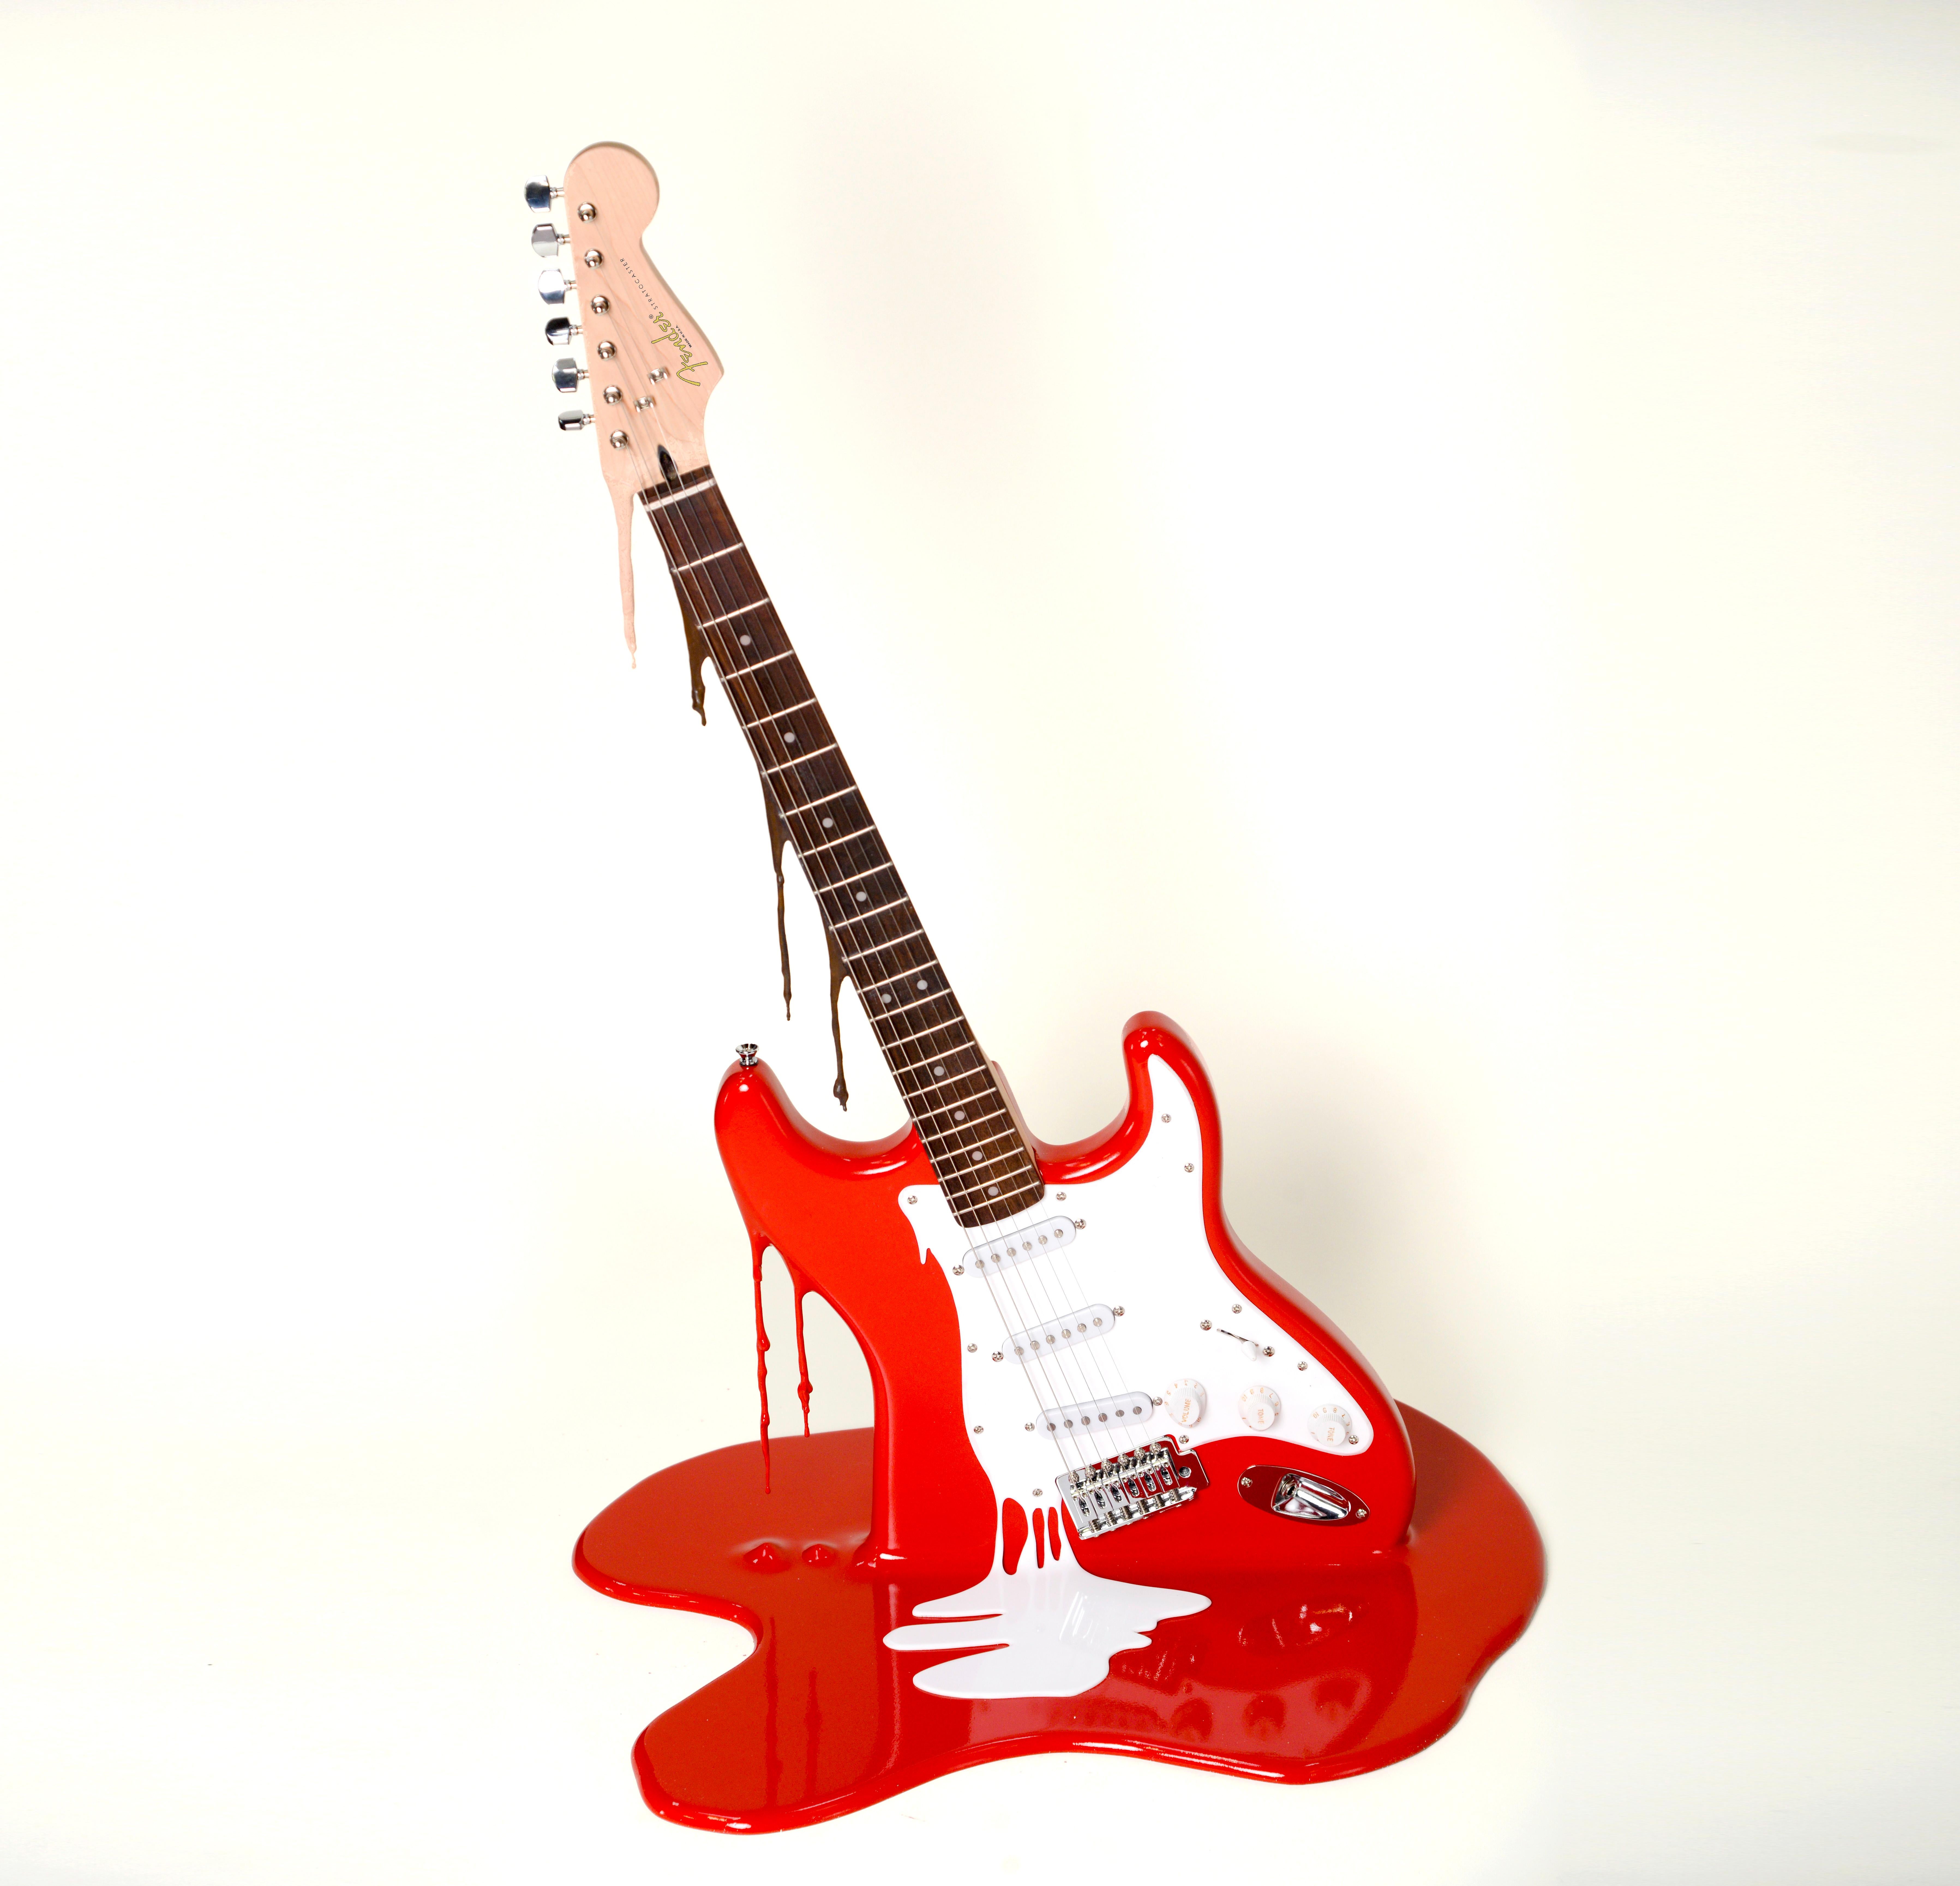 "The Art Of Noise" Genuine Sculpted Fender Stratocaster Guitar